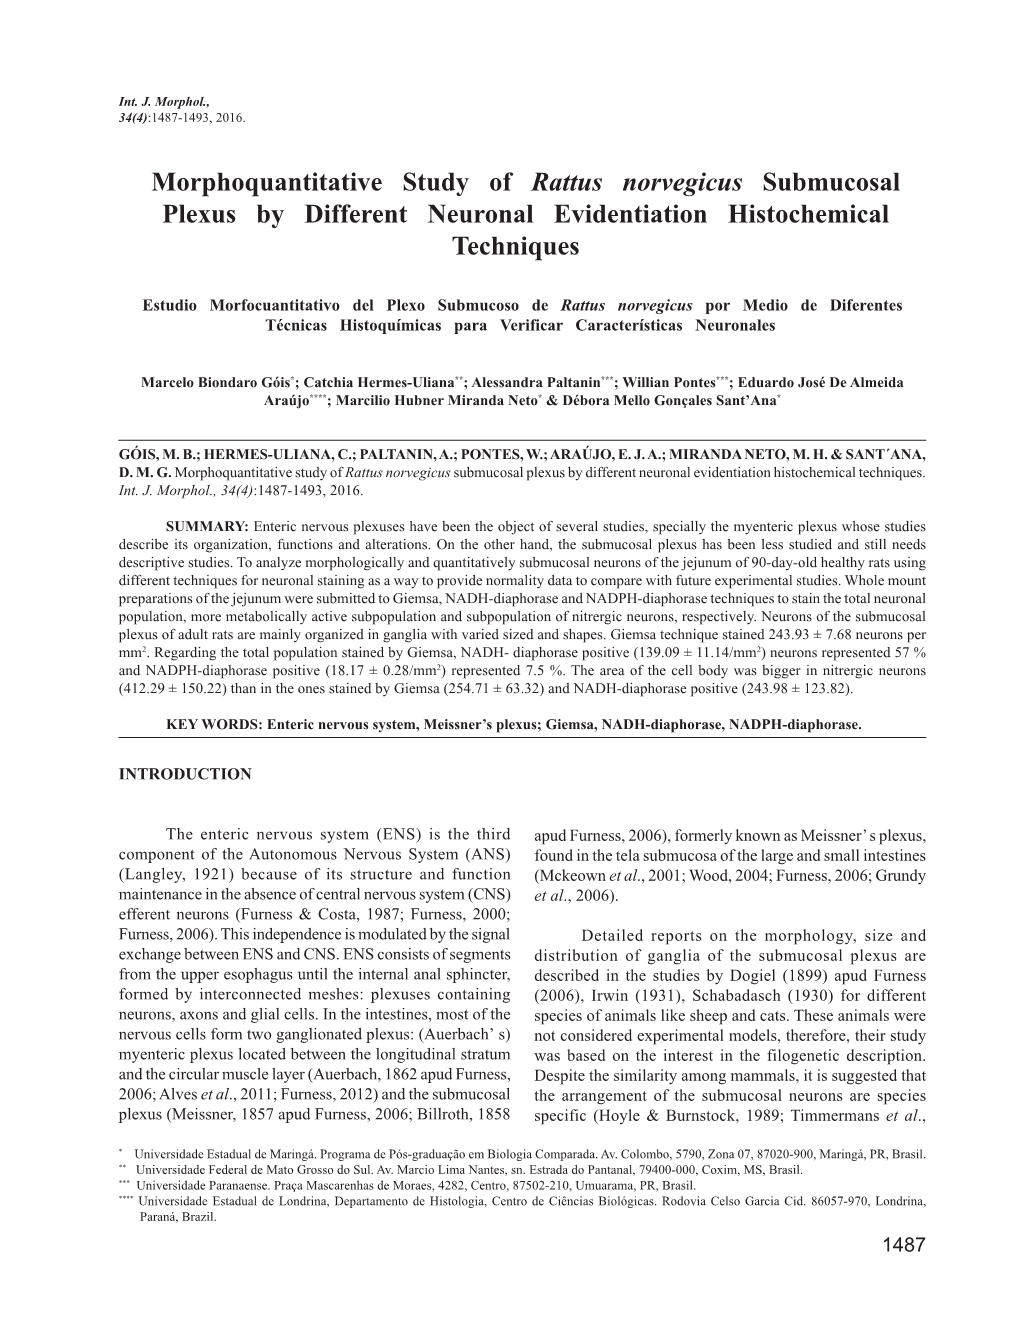 Morphoquantitative Study of Rattus Norvegicus Submucosal Plexus by Different Neuronal Evidentiation Histochemical Techniques